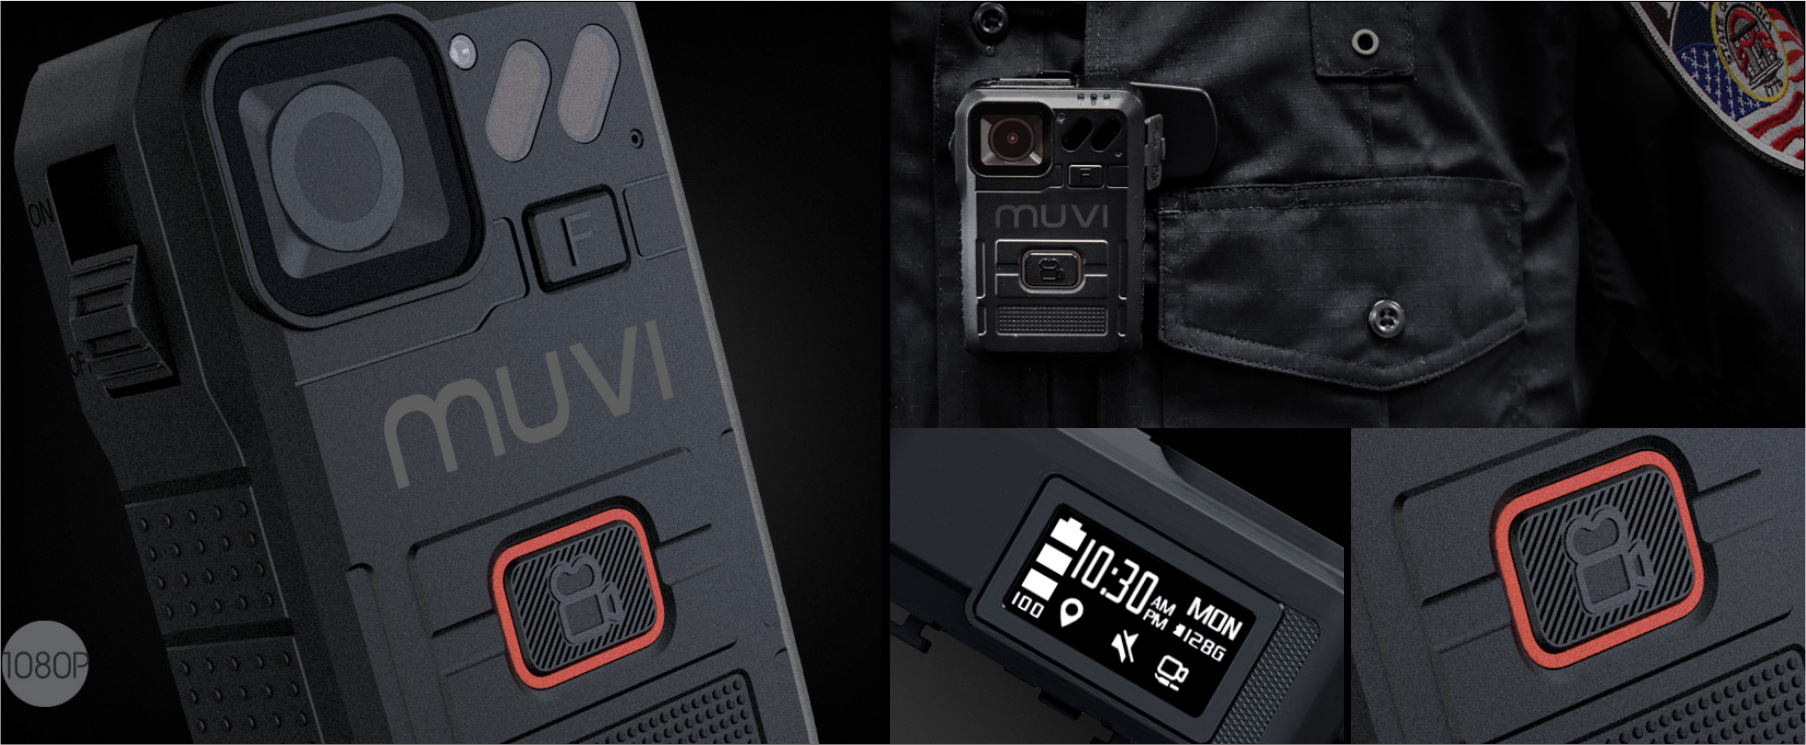 Veho MUVI HD Pro 3 Titan Bodyworn Infrared Camcorder close-ups.